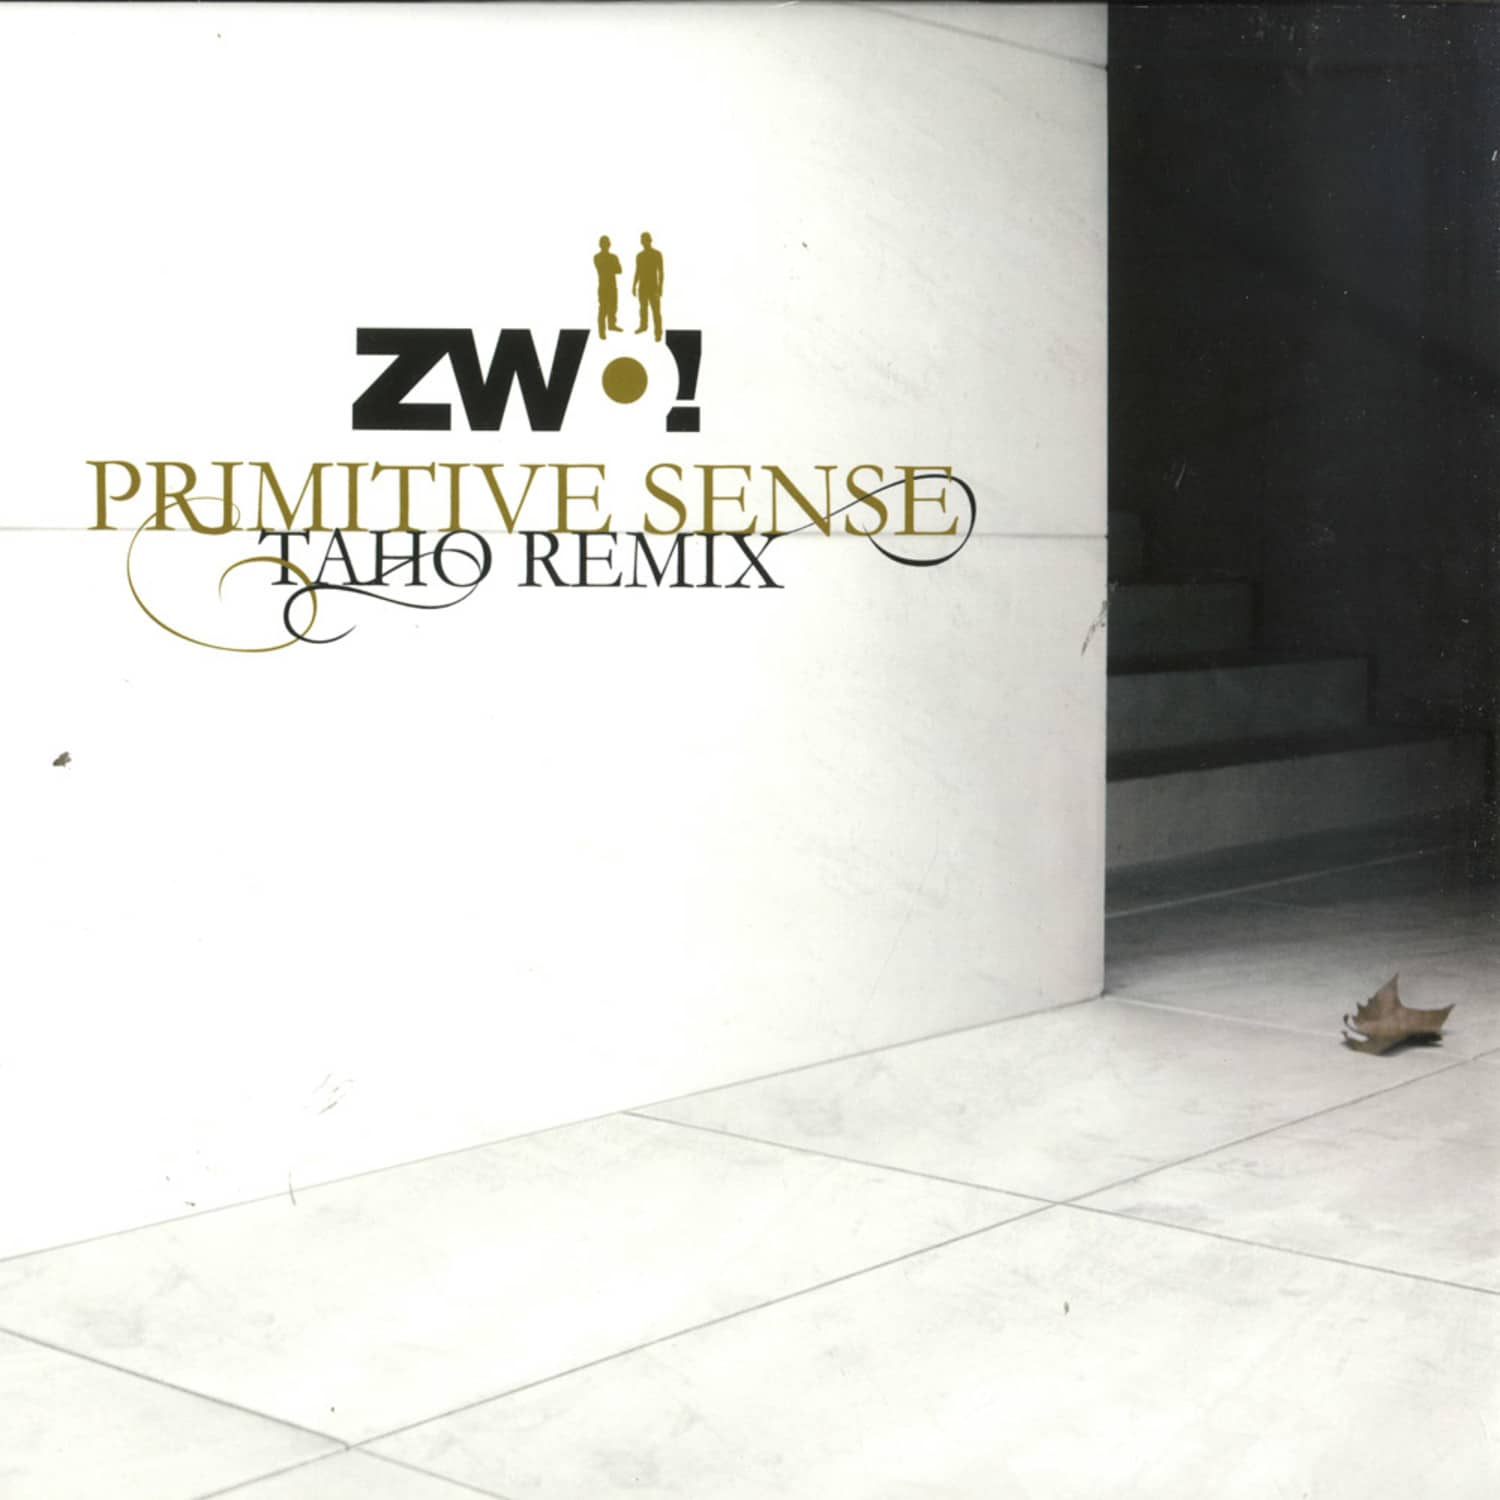 Zwo! - PRIMITIVE SENSE